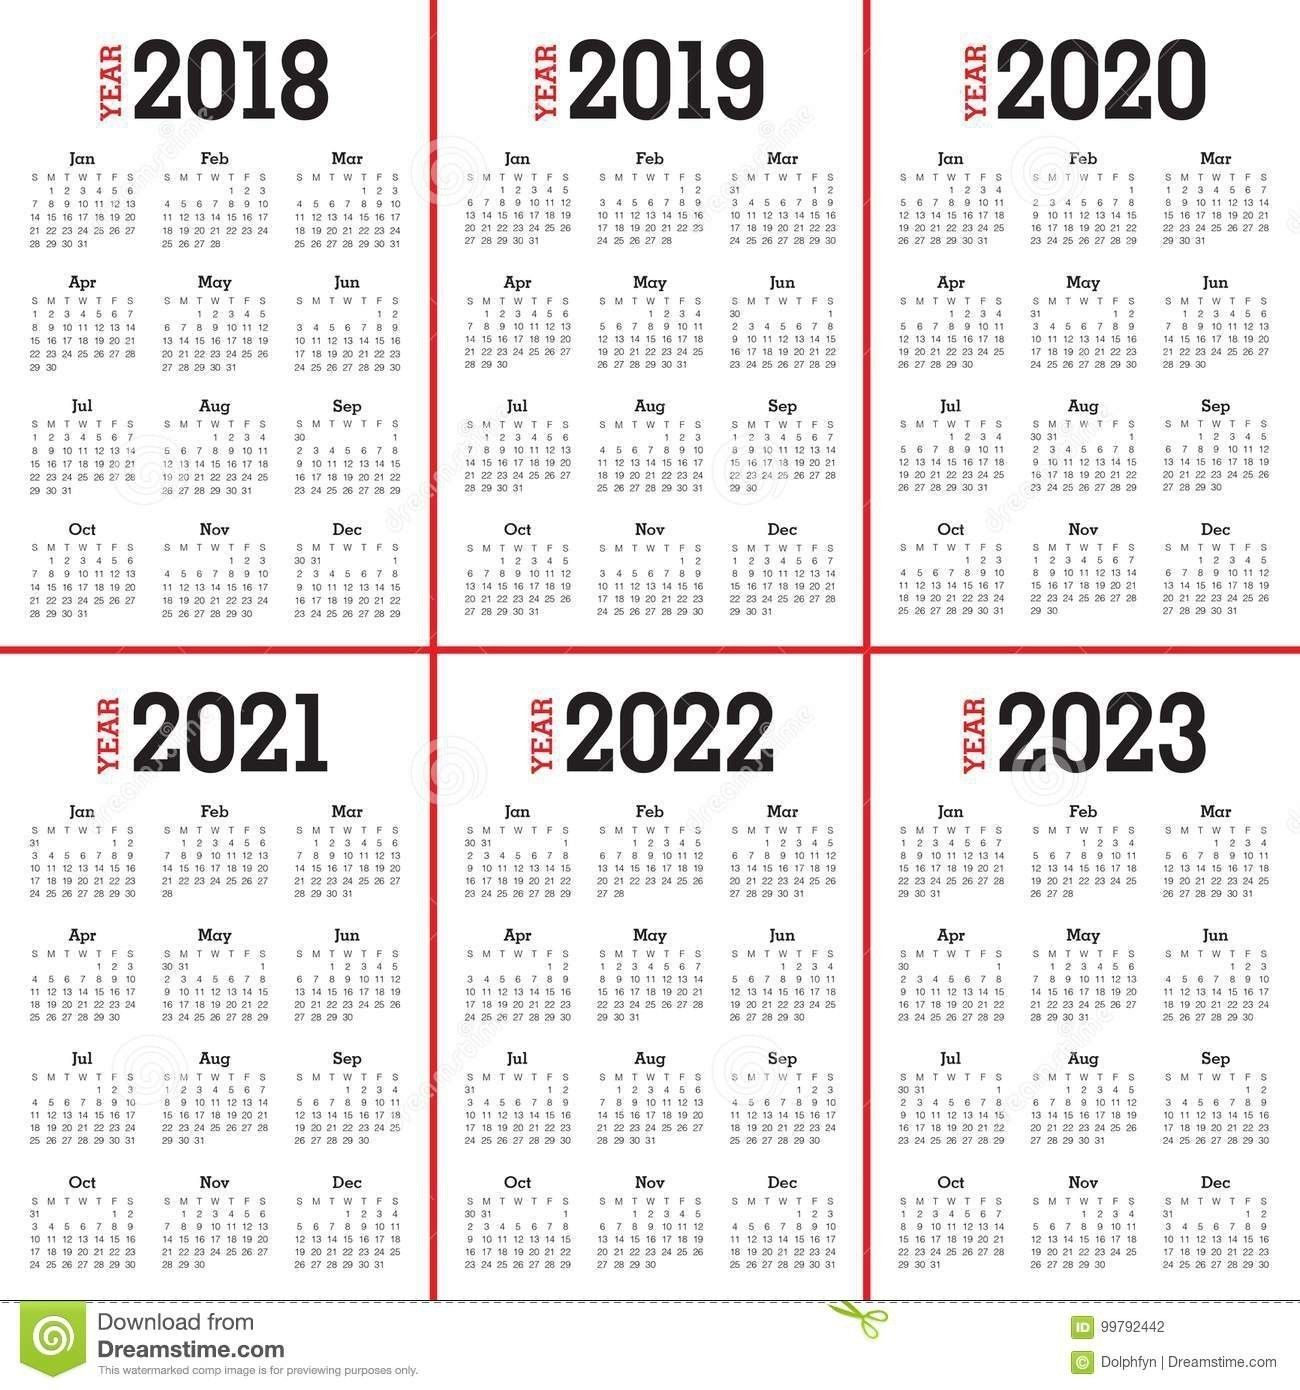 3 Year Calendar 2021 To 2023